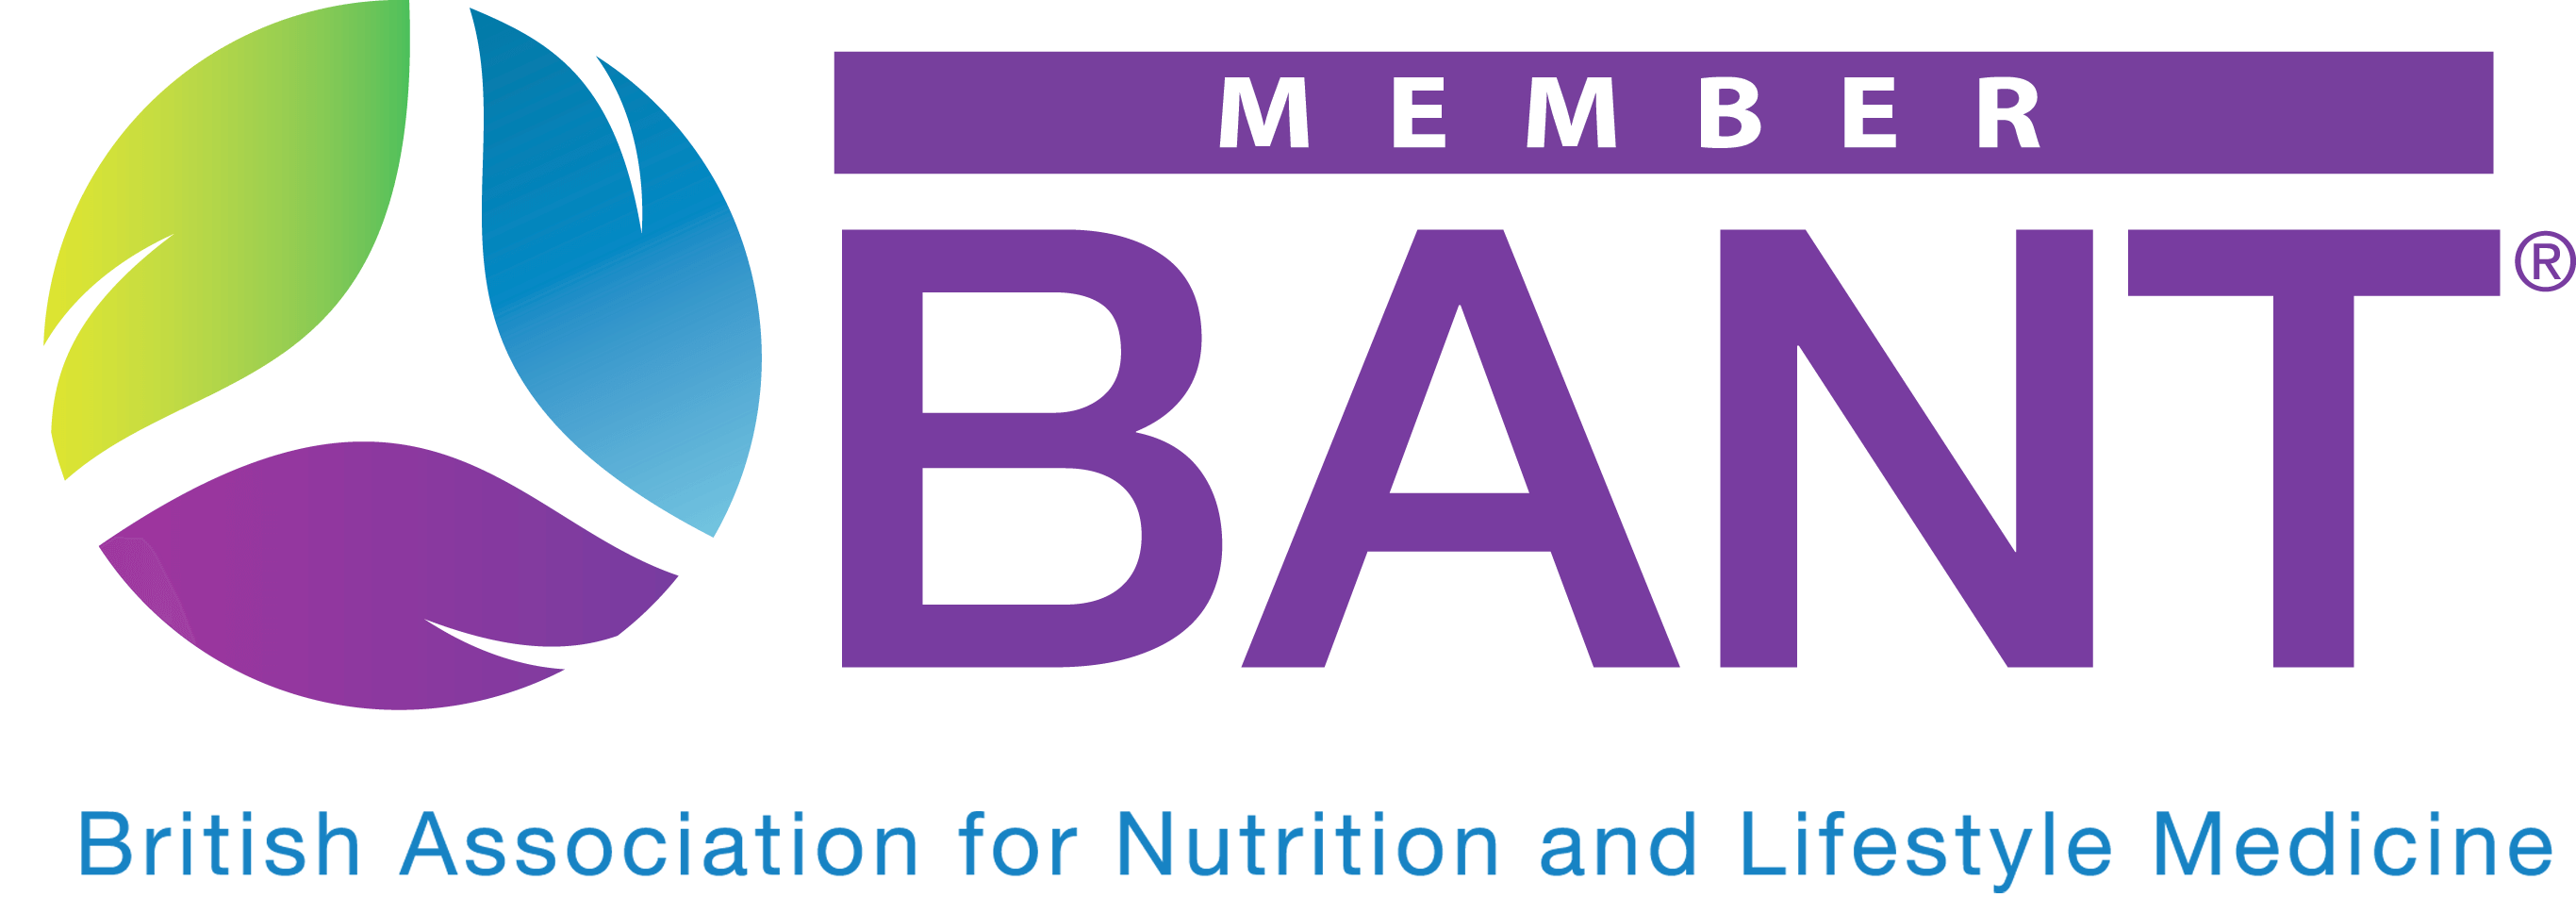 Member of BANT Logo